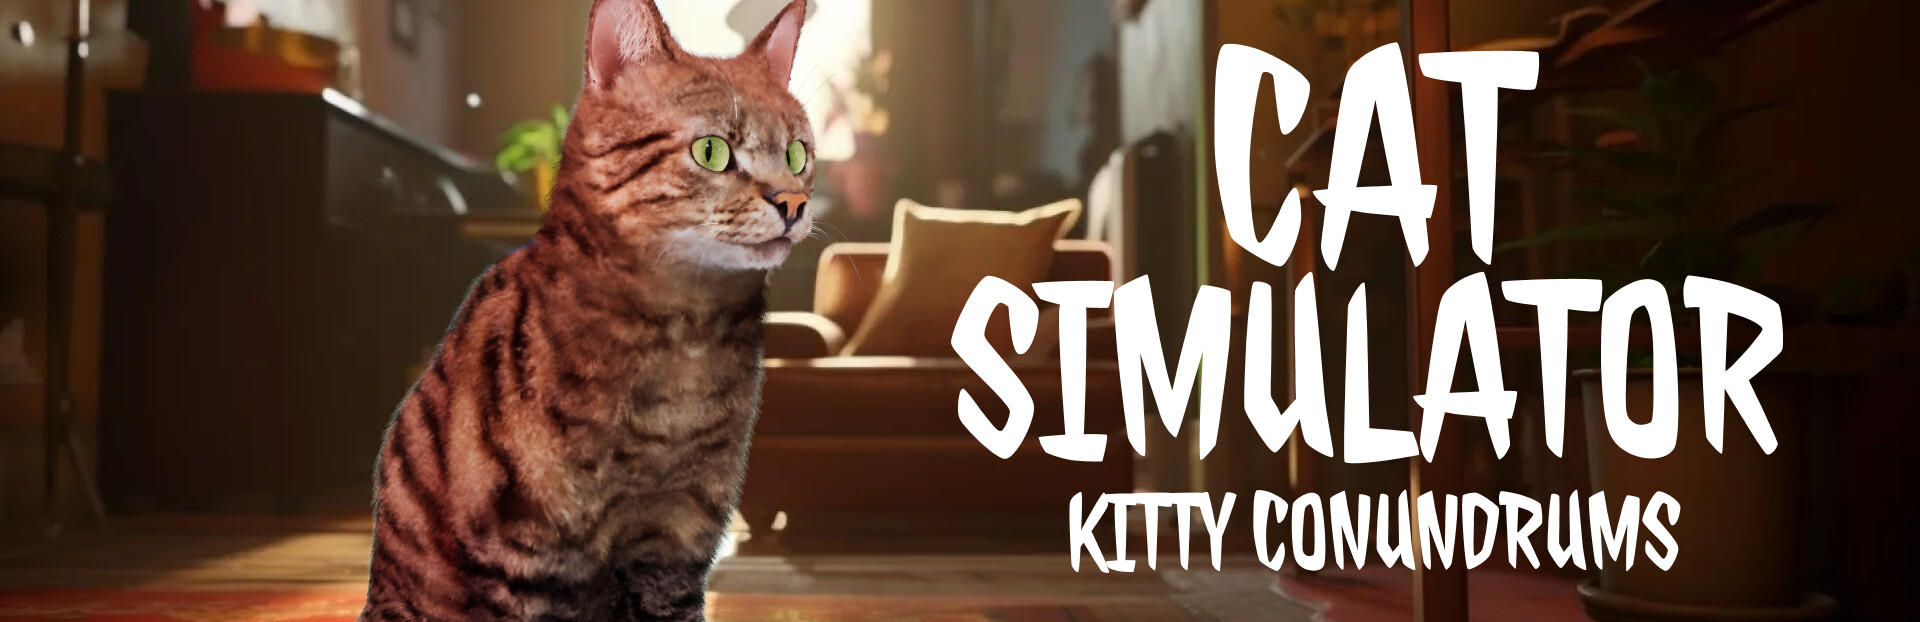 Screenshot 1 of Cat Simulator - Kitty Conundrums 